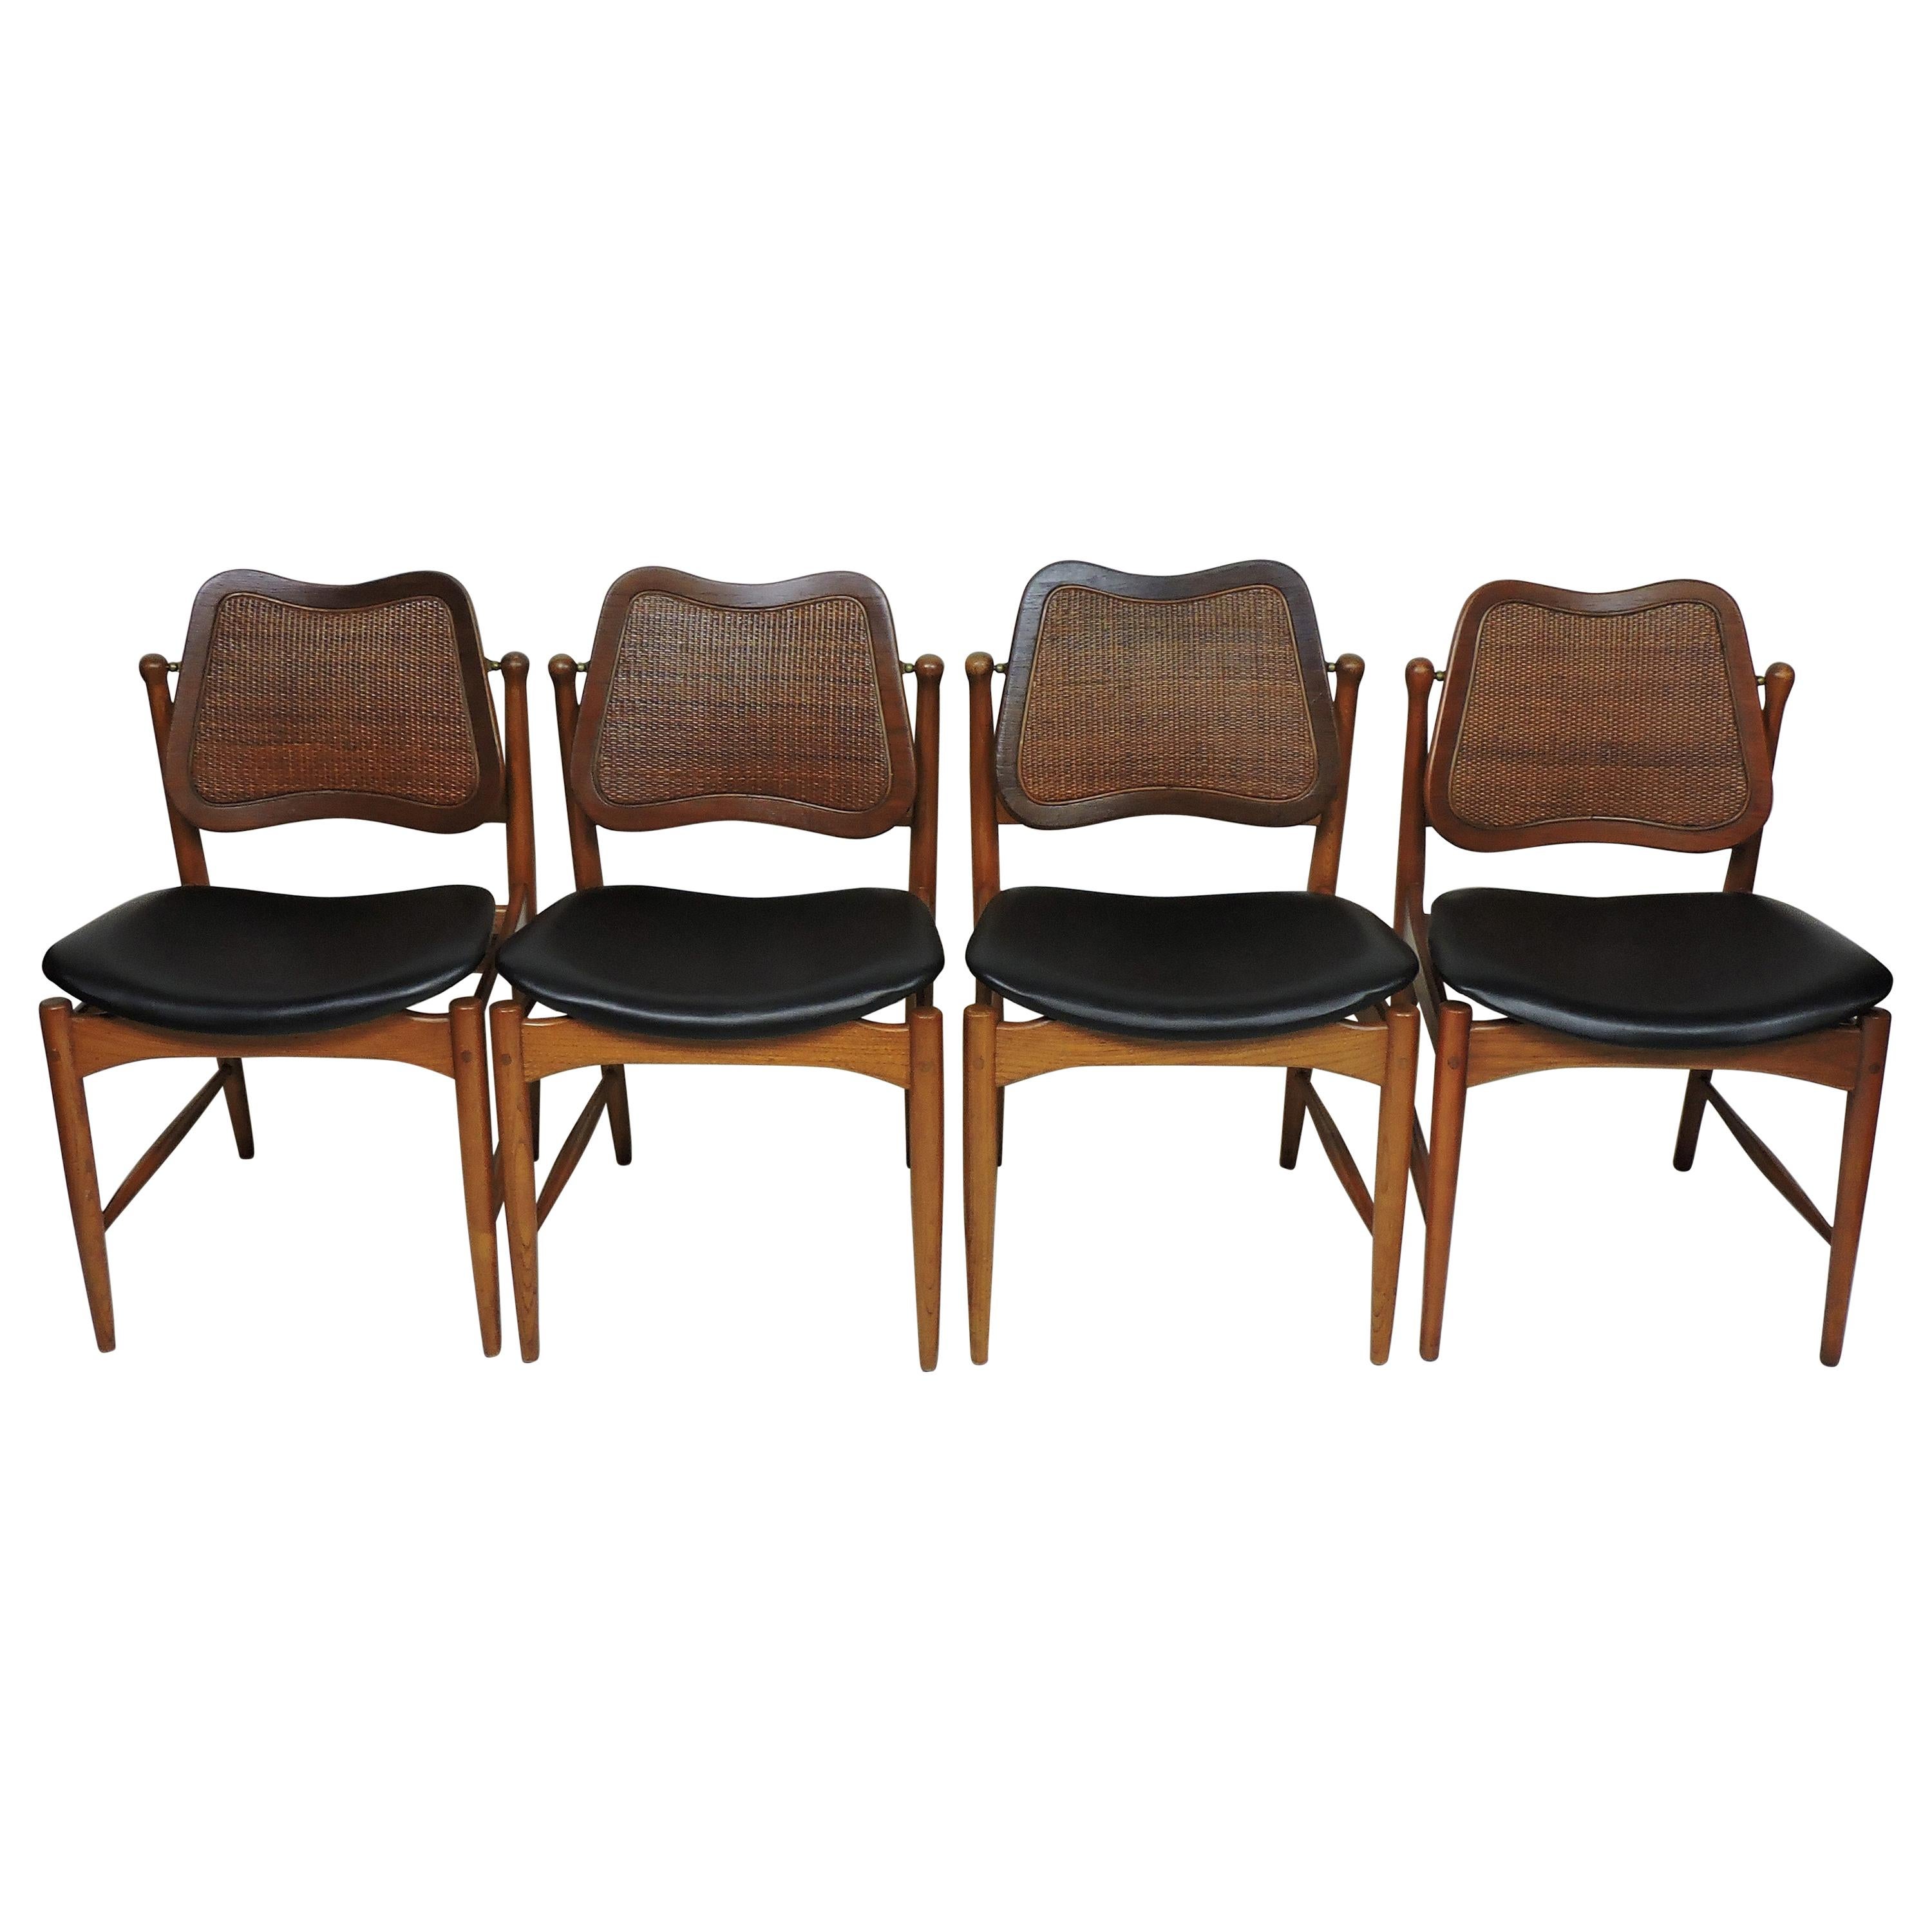 Four Arne Vodder Midcentury Danish Modern Teak and Cane Dining Chairs